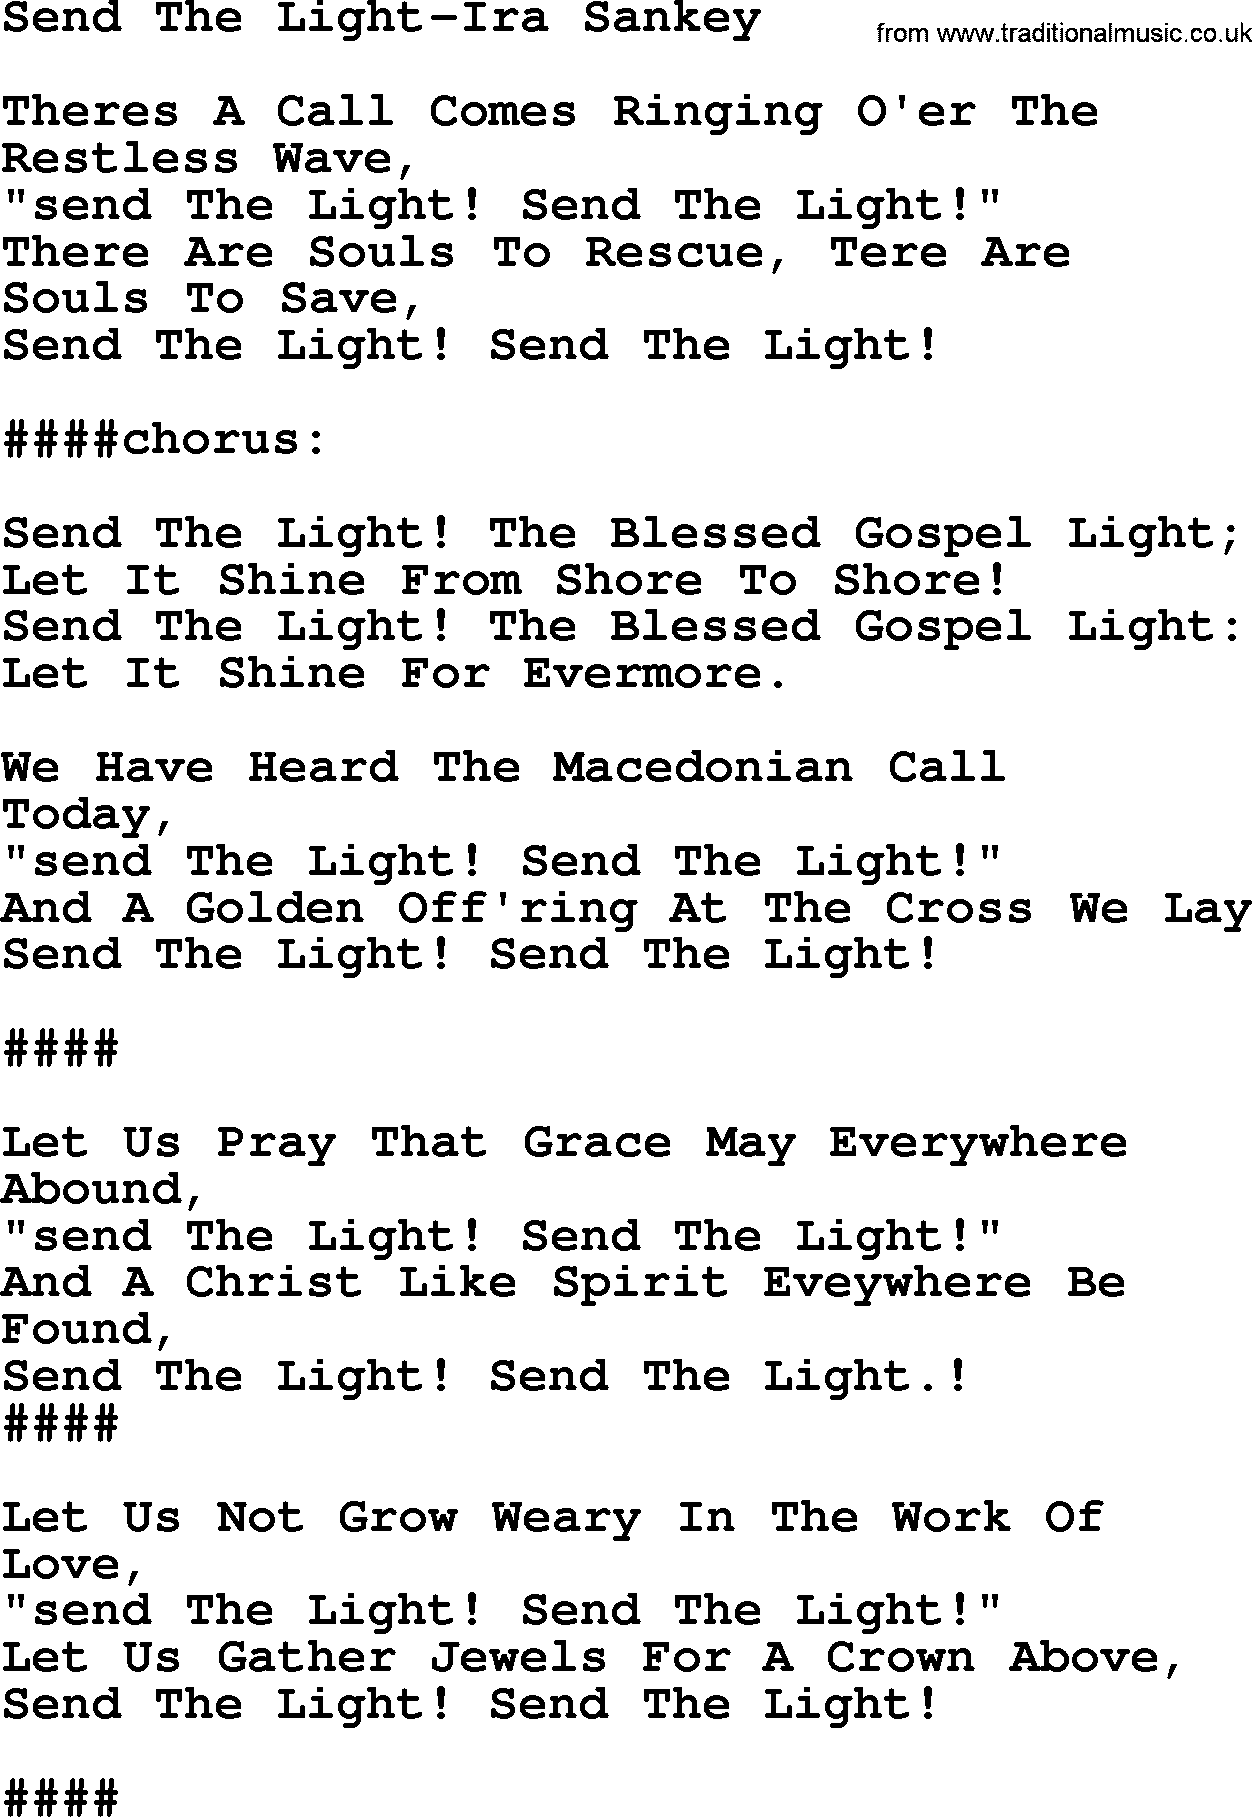 Ira Sankey hymn: Send The Light-Ira Sankey, lyrics